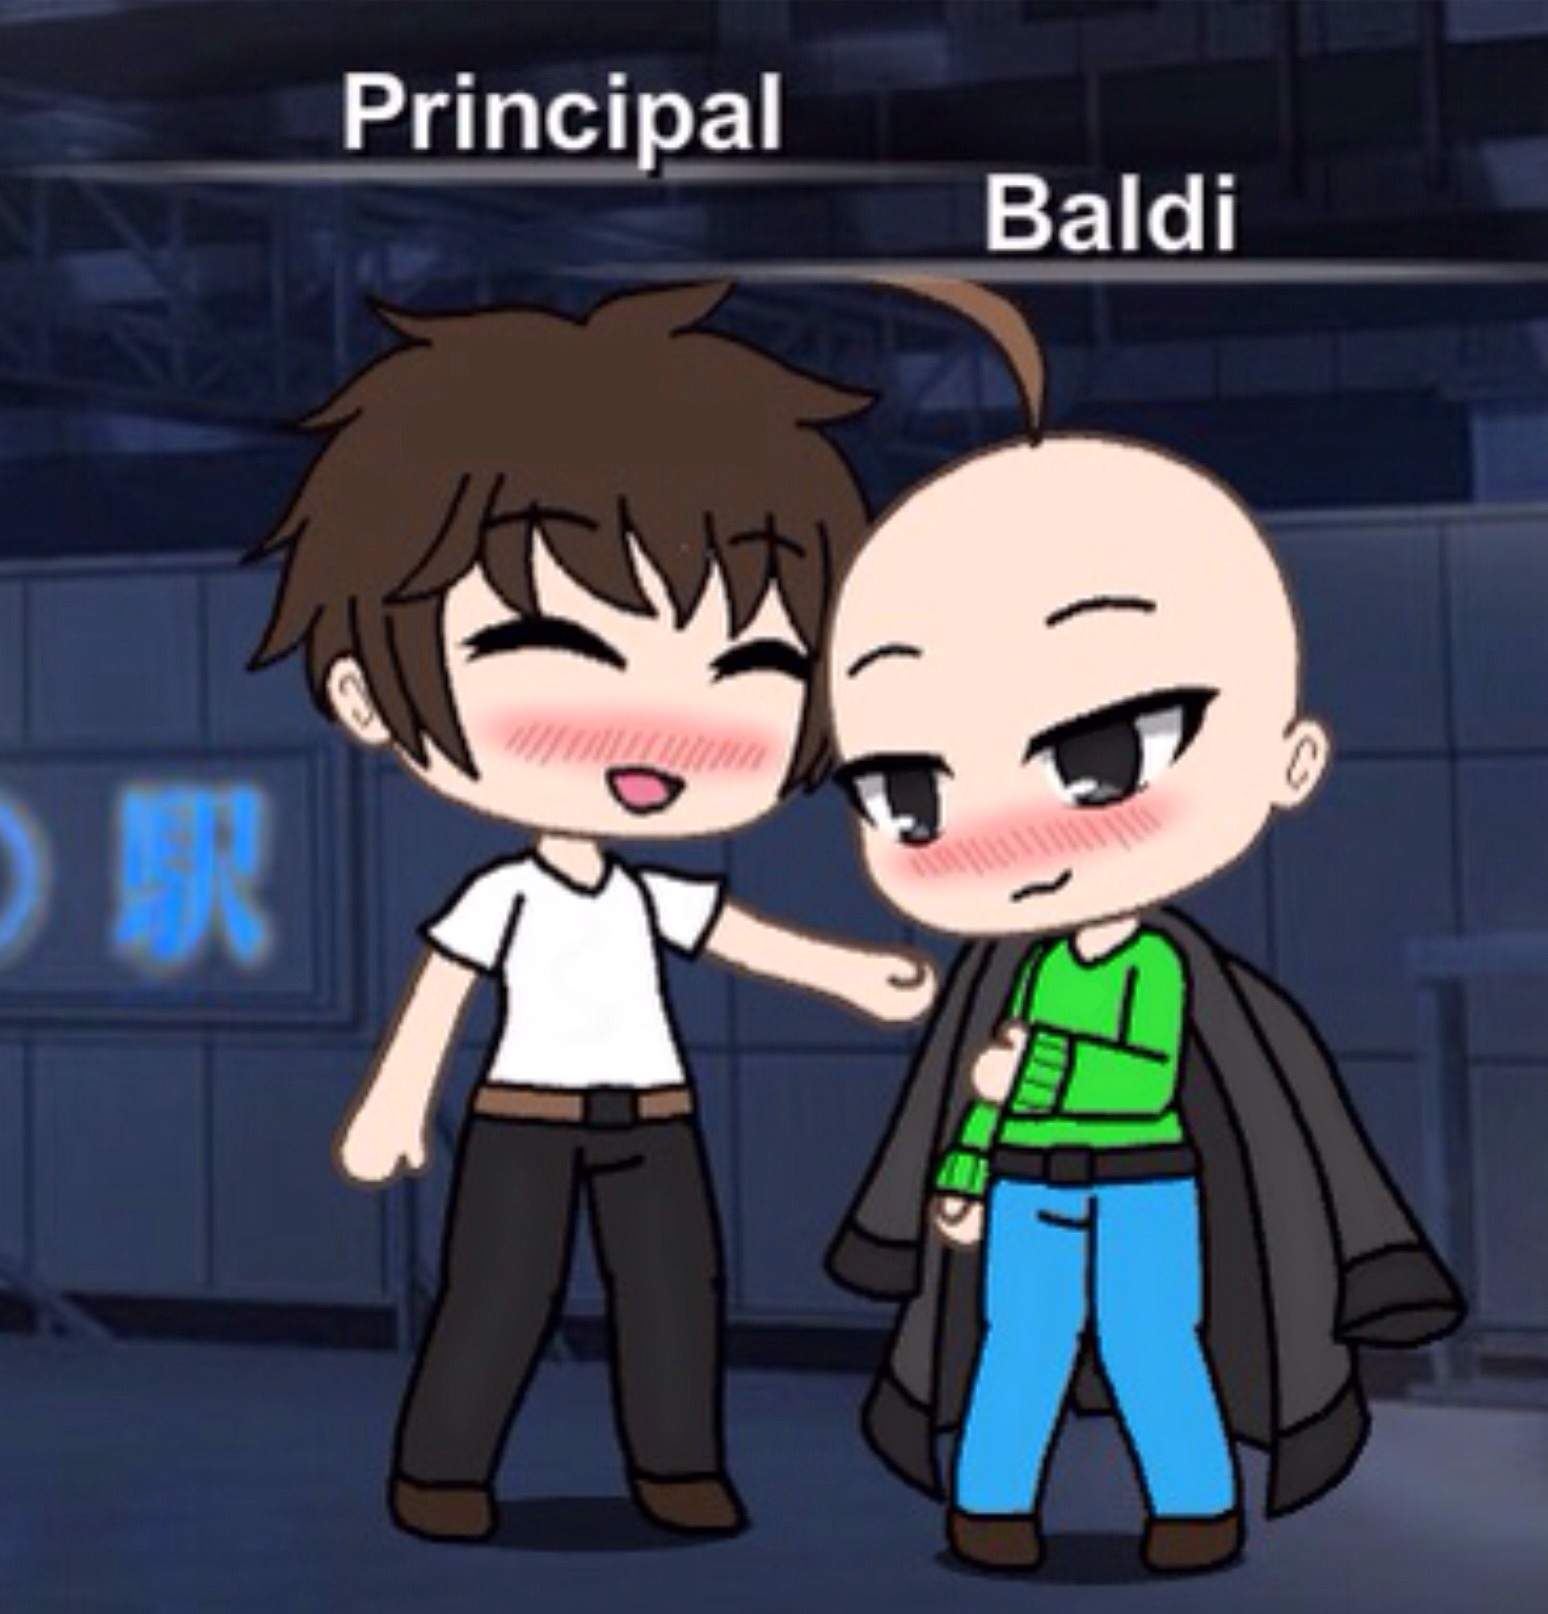 Baldi principal. Baldi s Basics principal. Baldi x principal фанфики. БАЛДИ И директор арты. Baldi x principal яой.